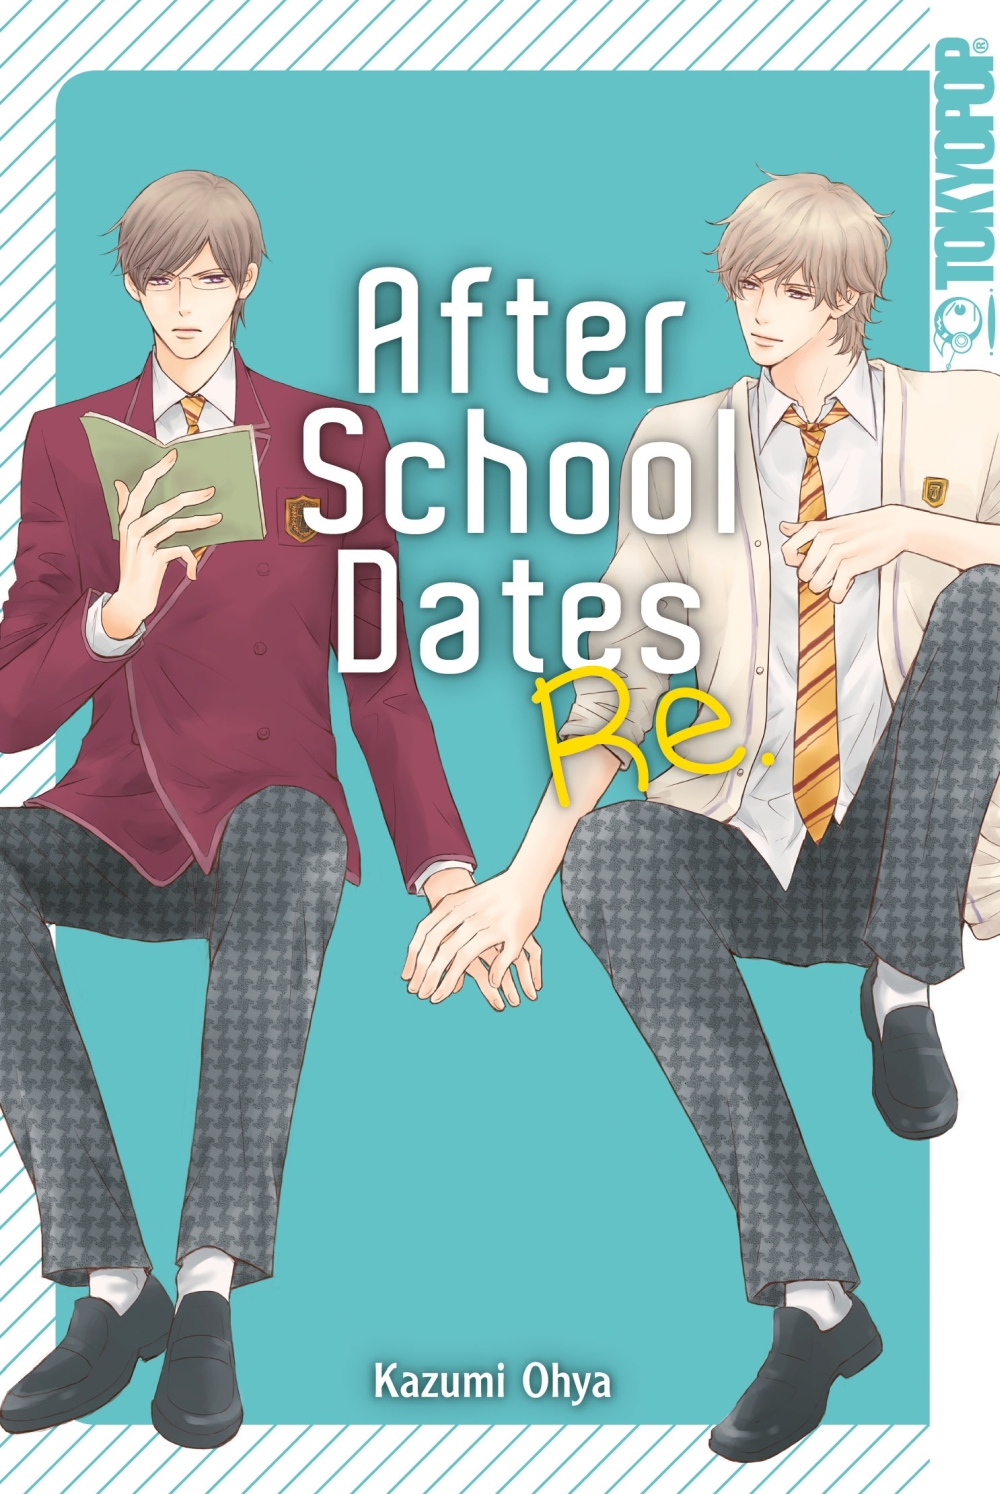 After School Dates Re. Manga (New)